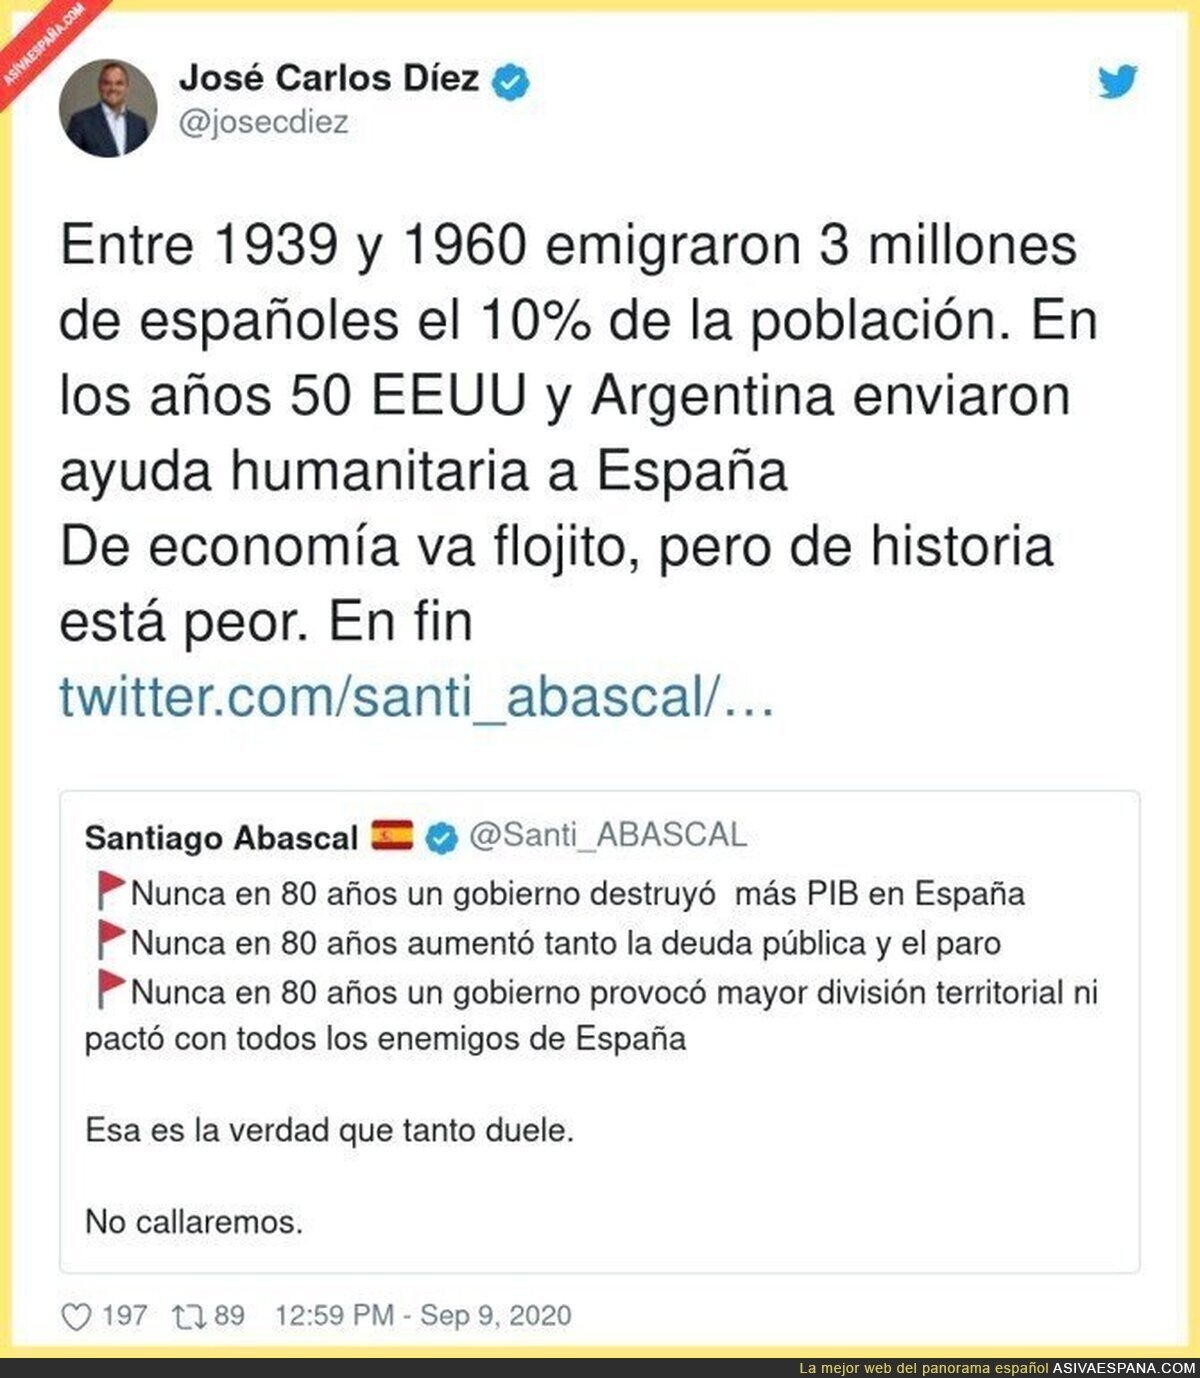 La infinita ignorancia de Santiago Abascal